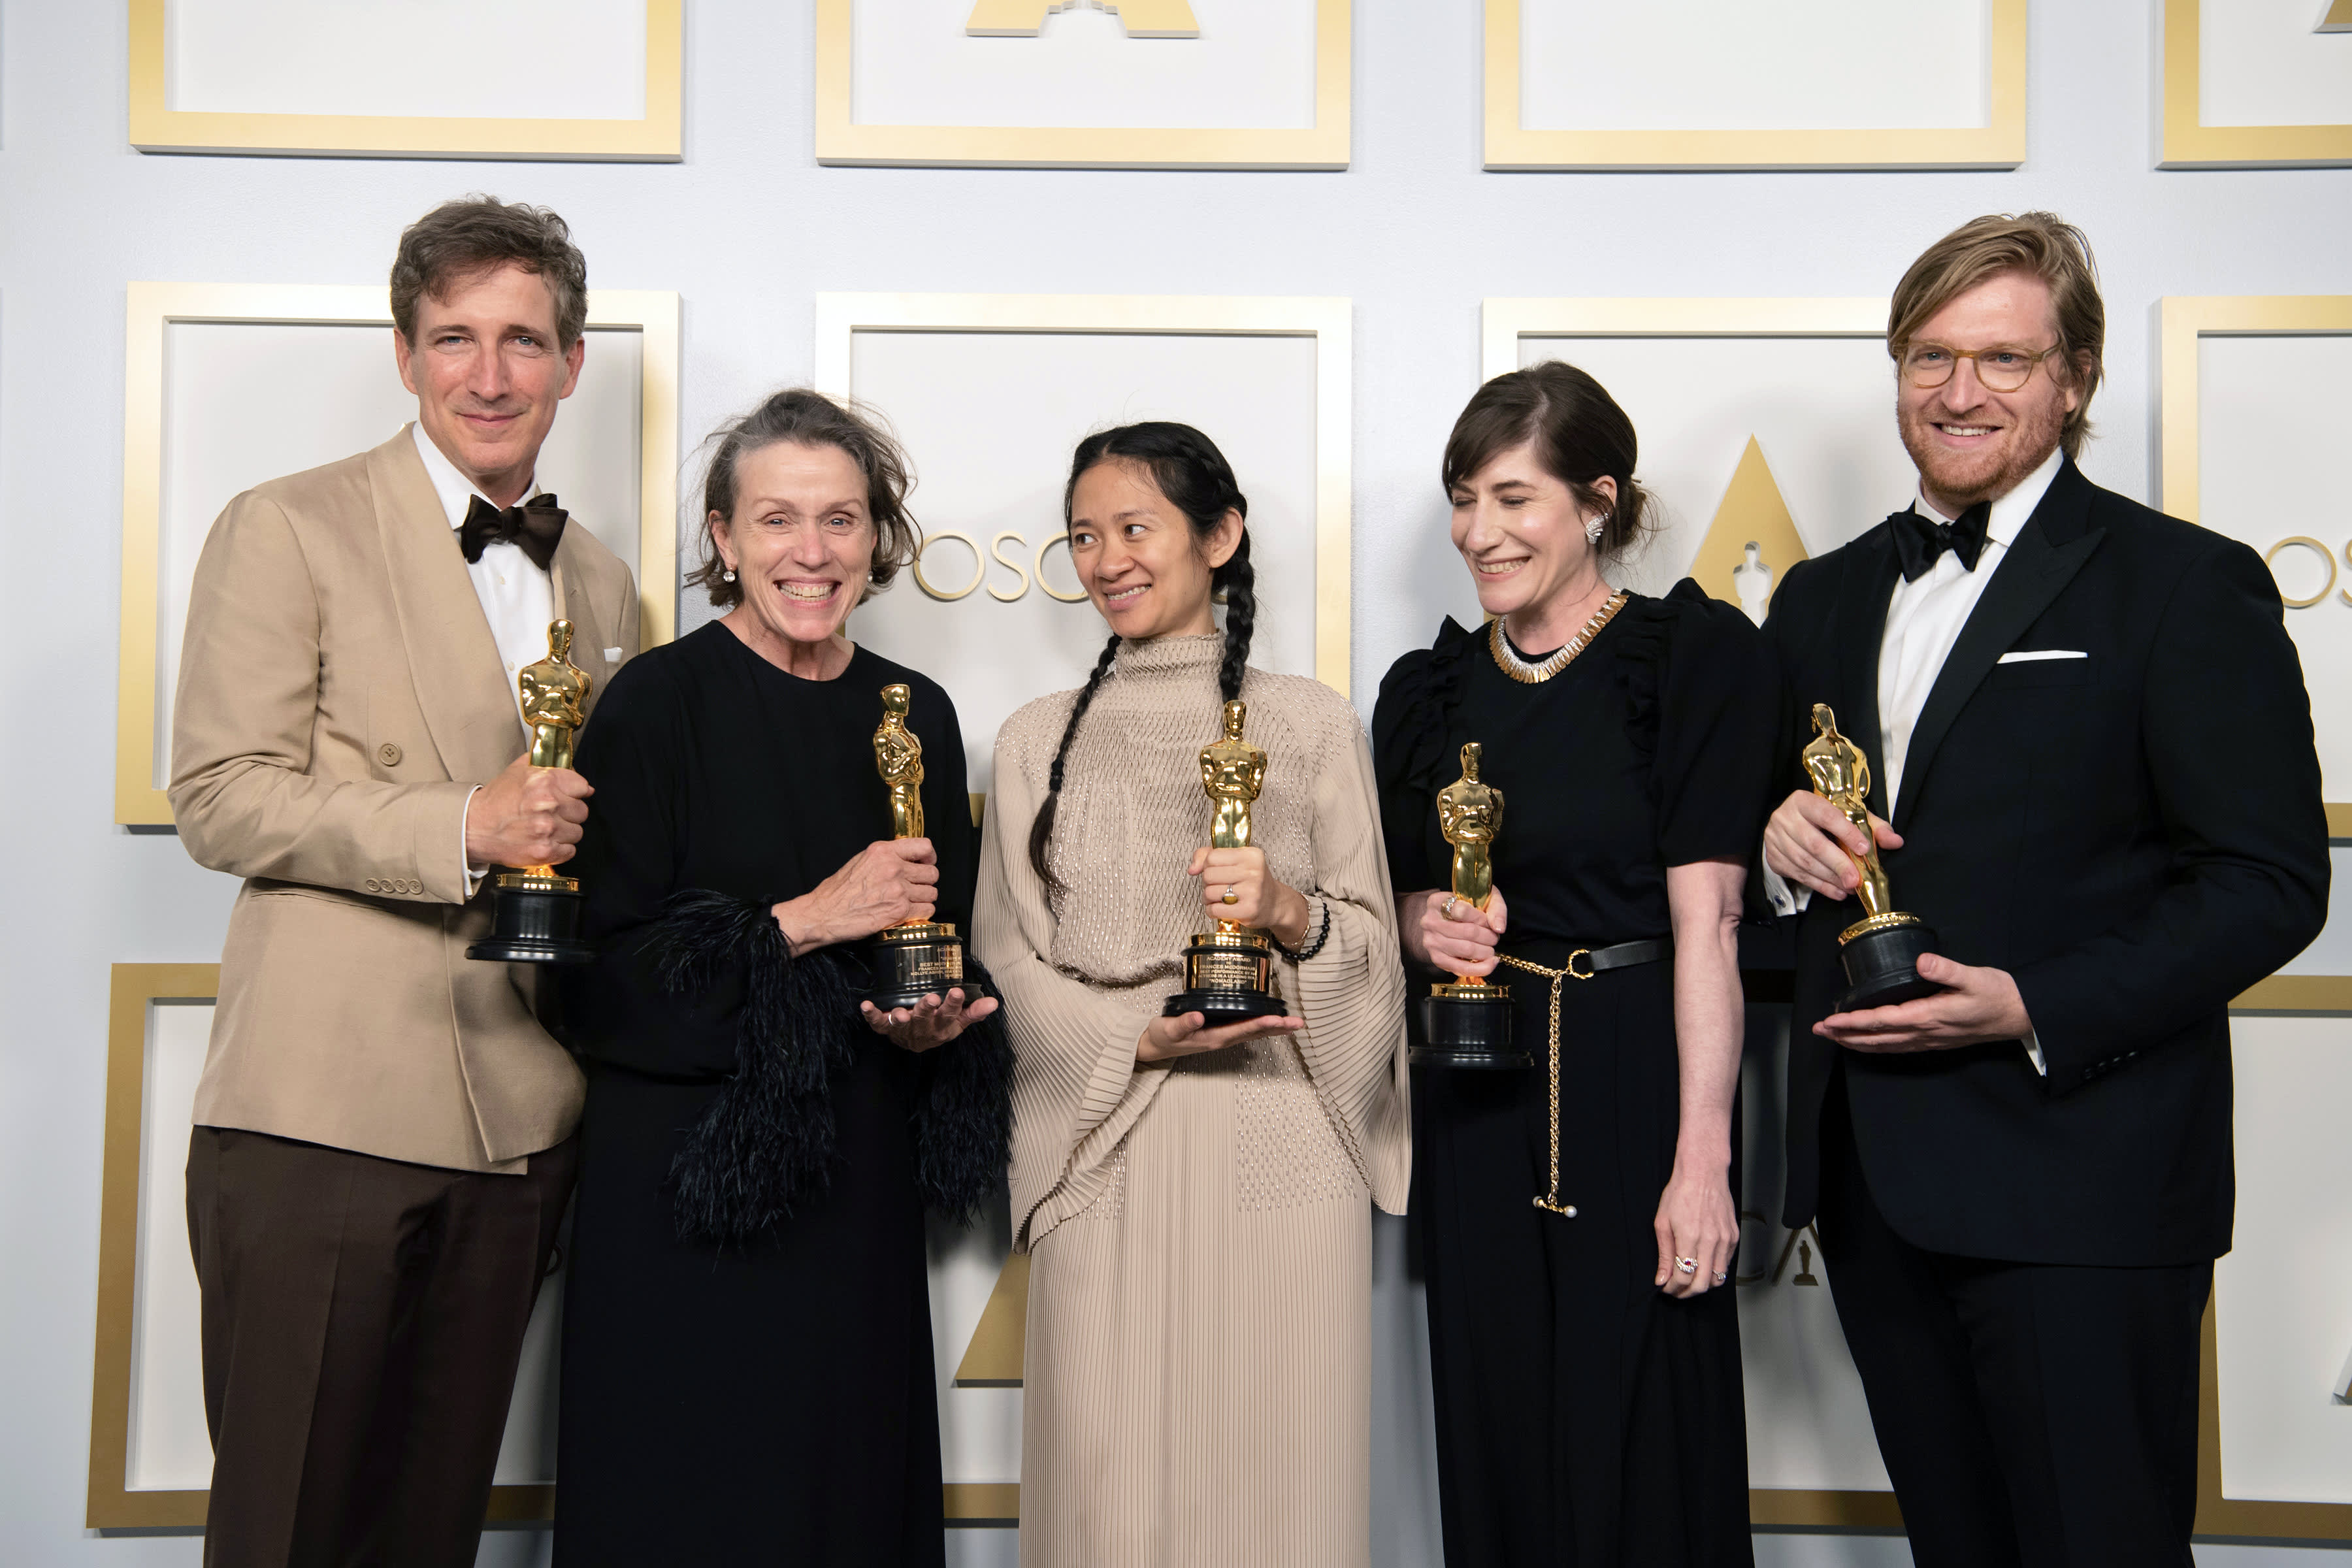 Oscars 2021: Complete winners list - ABC News